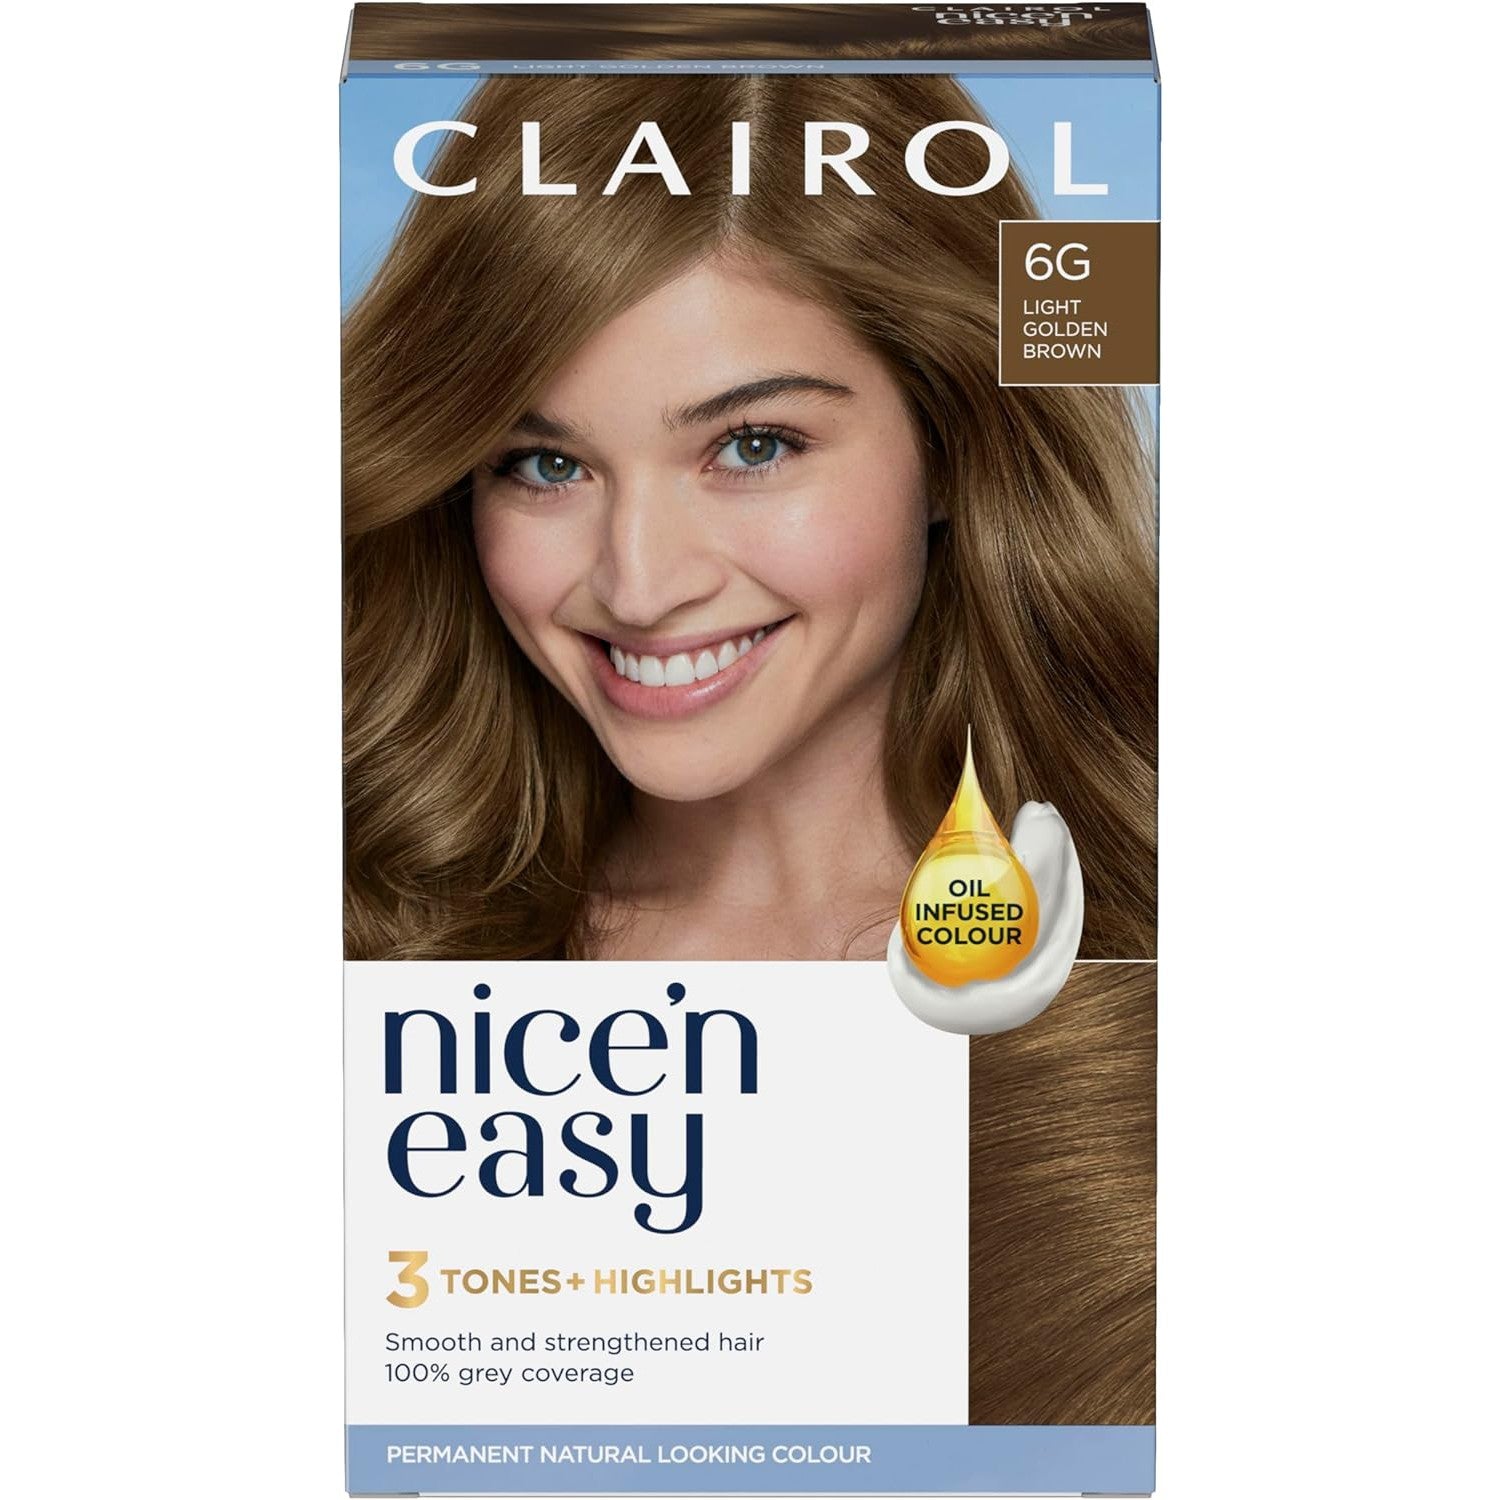 Clairol Nice'n Easy Crème, Permanent Hair Dye, 6G Light Golden Brown